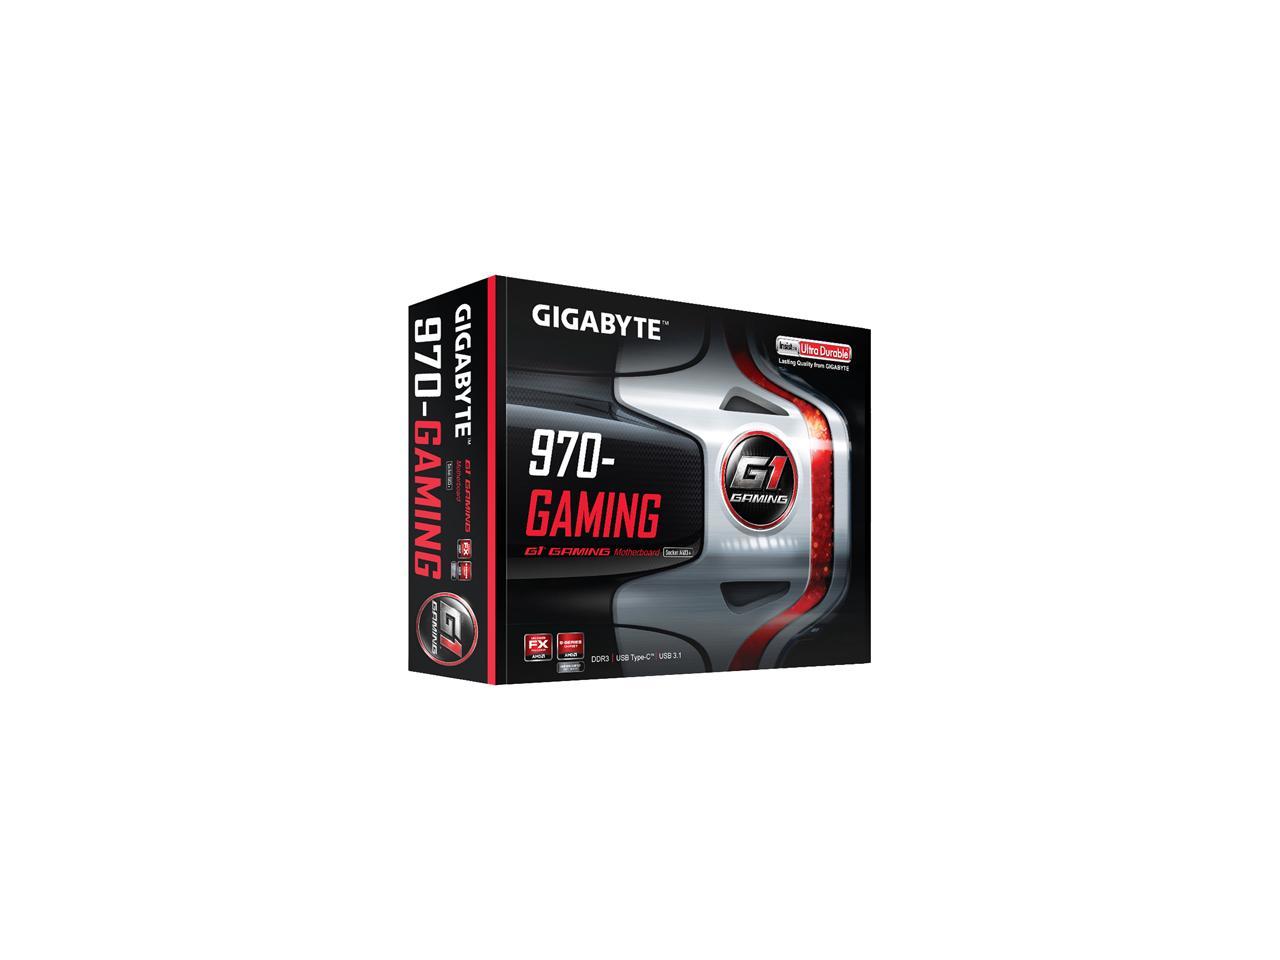 Used - Very Good: GIGABYTE GA-970-Gaming (rev. 1.0) AM3+/AM3 ATX AMD